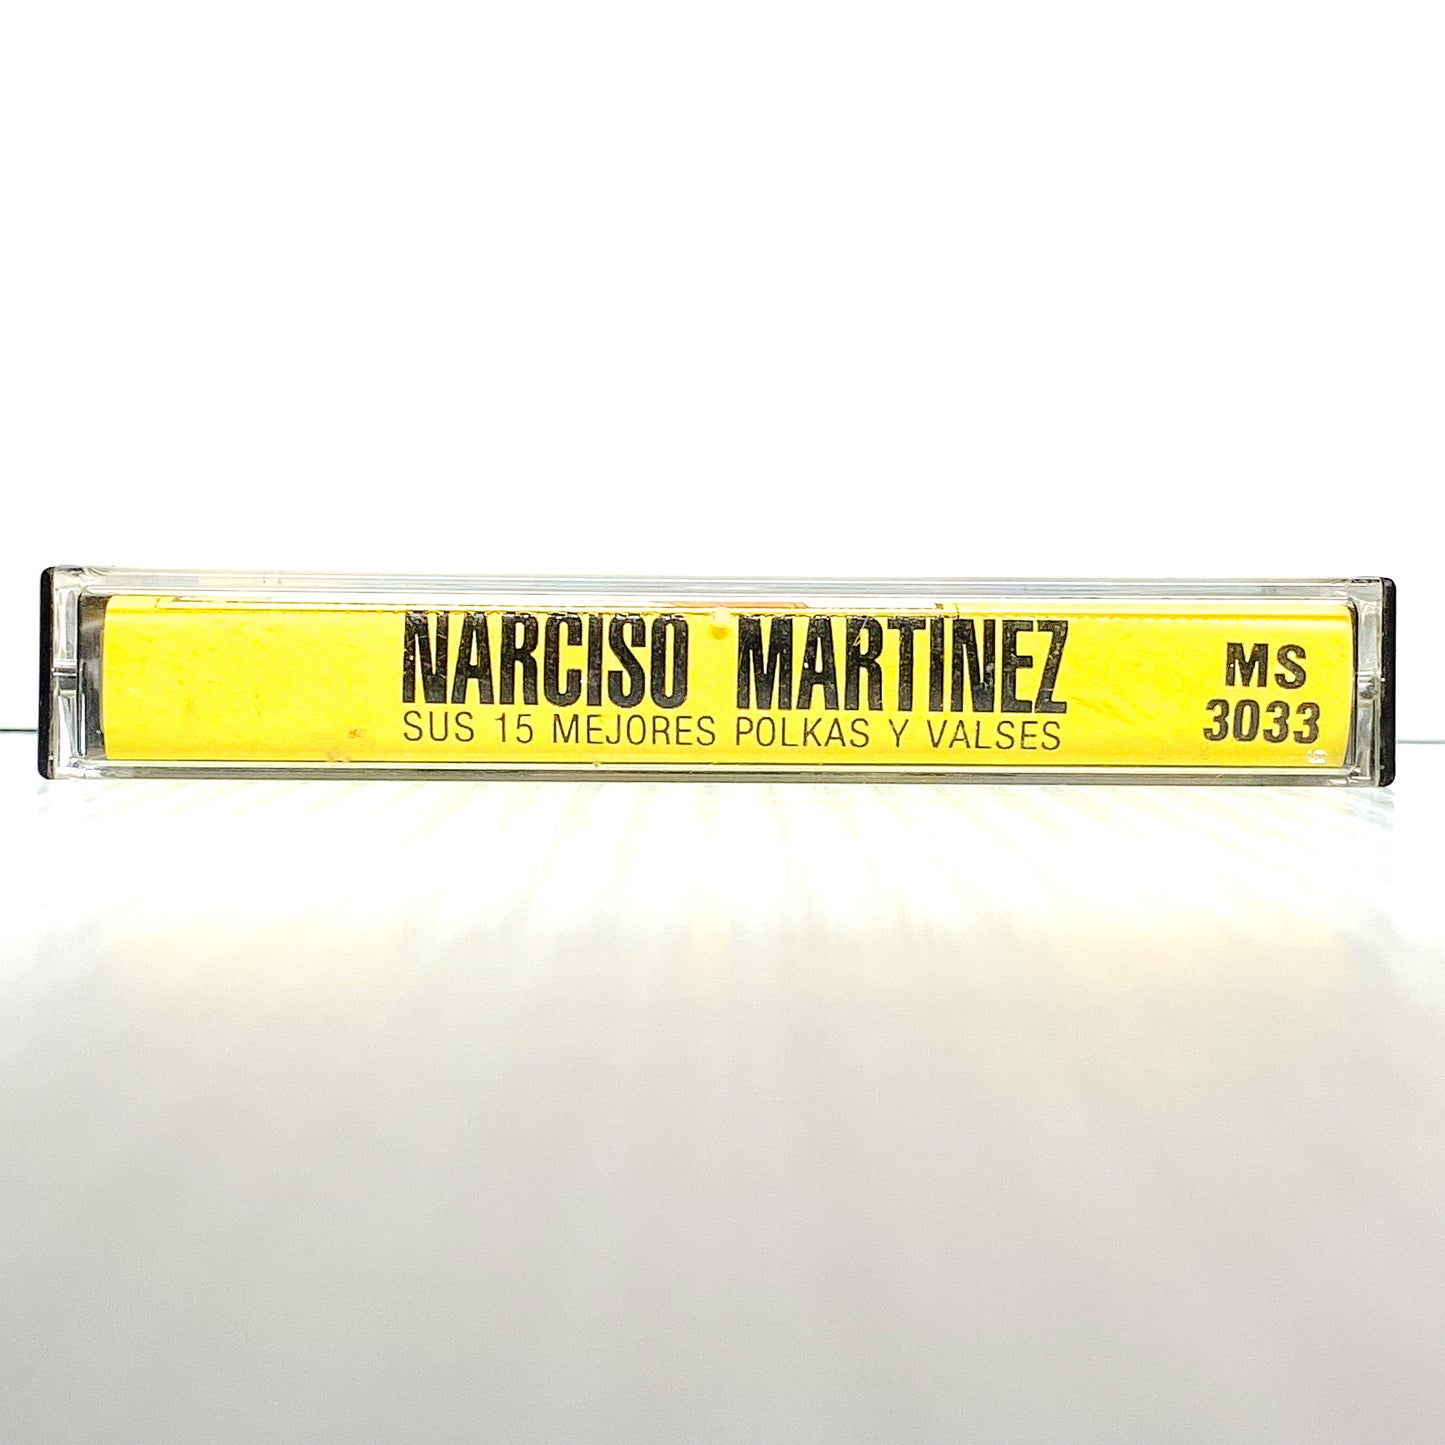 Narciso Martinez - Mejores Polkas Y Valses (Cassette)